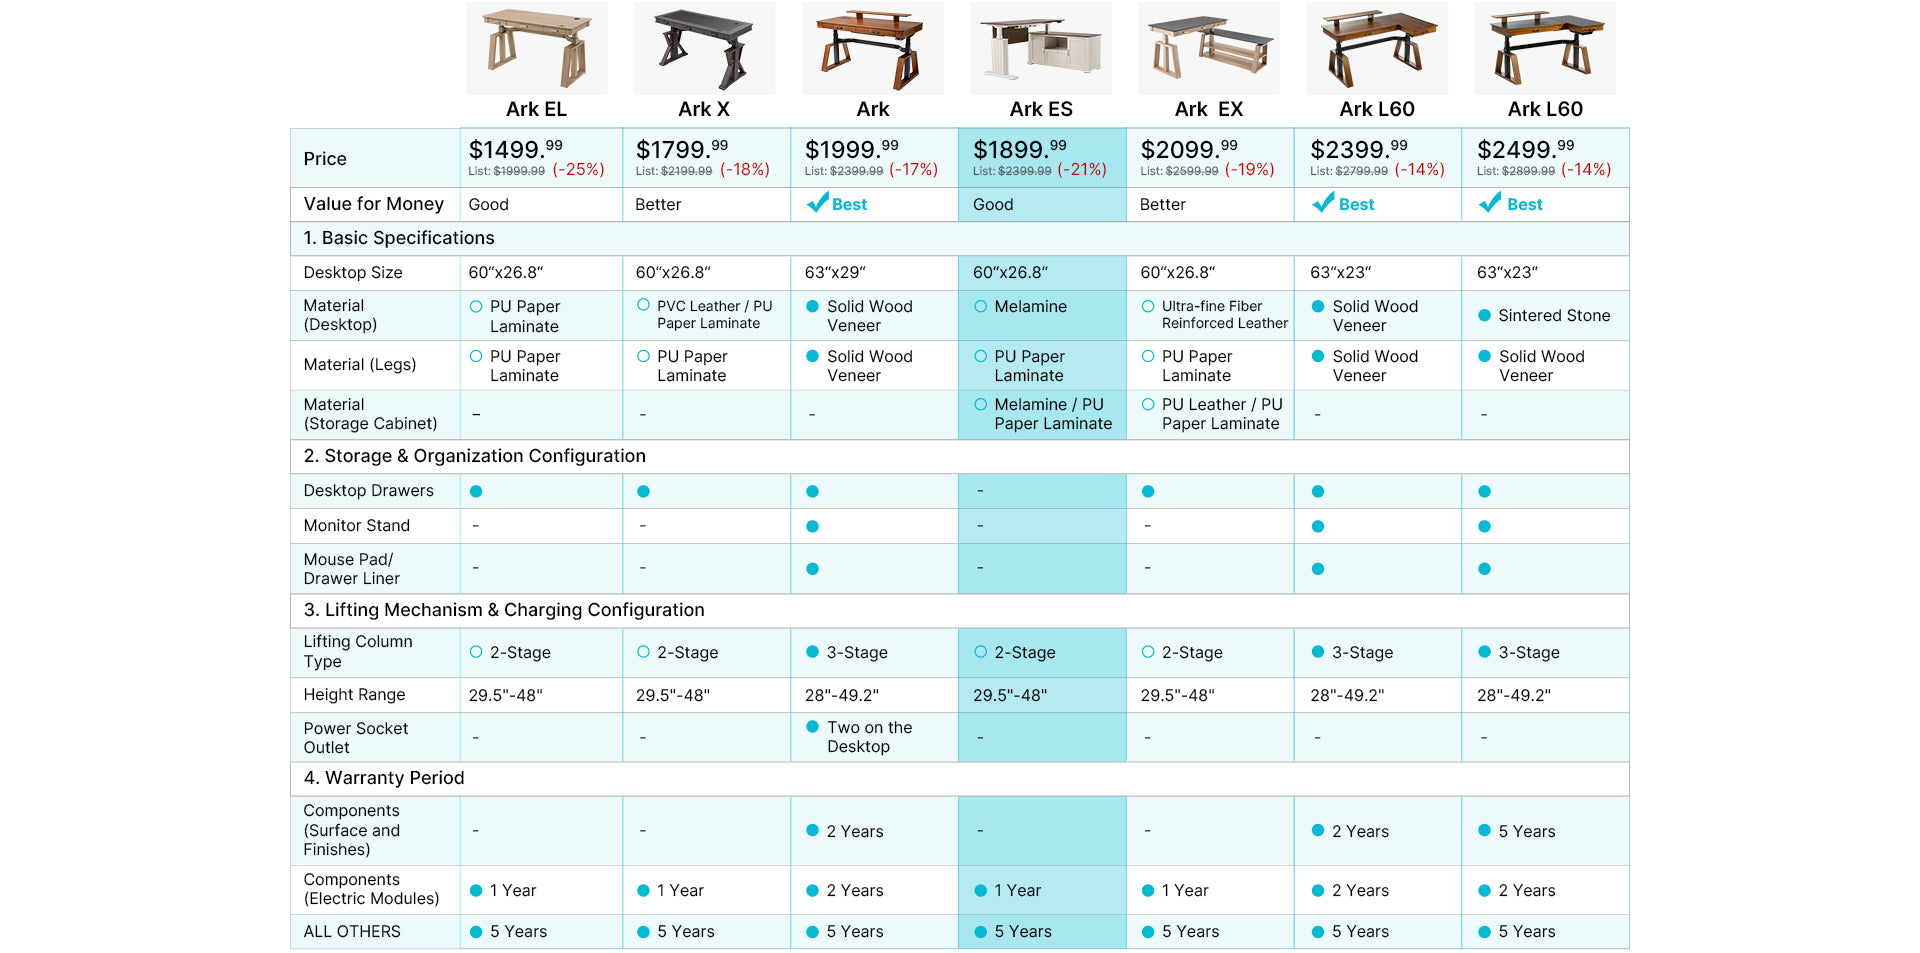 Ark Series Product Comparison Chart